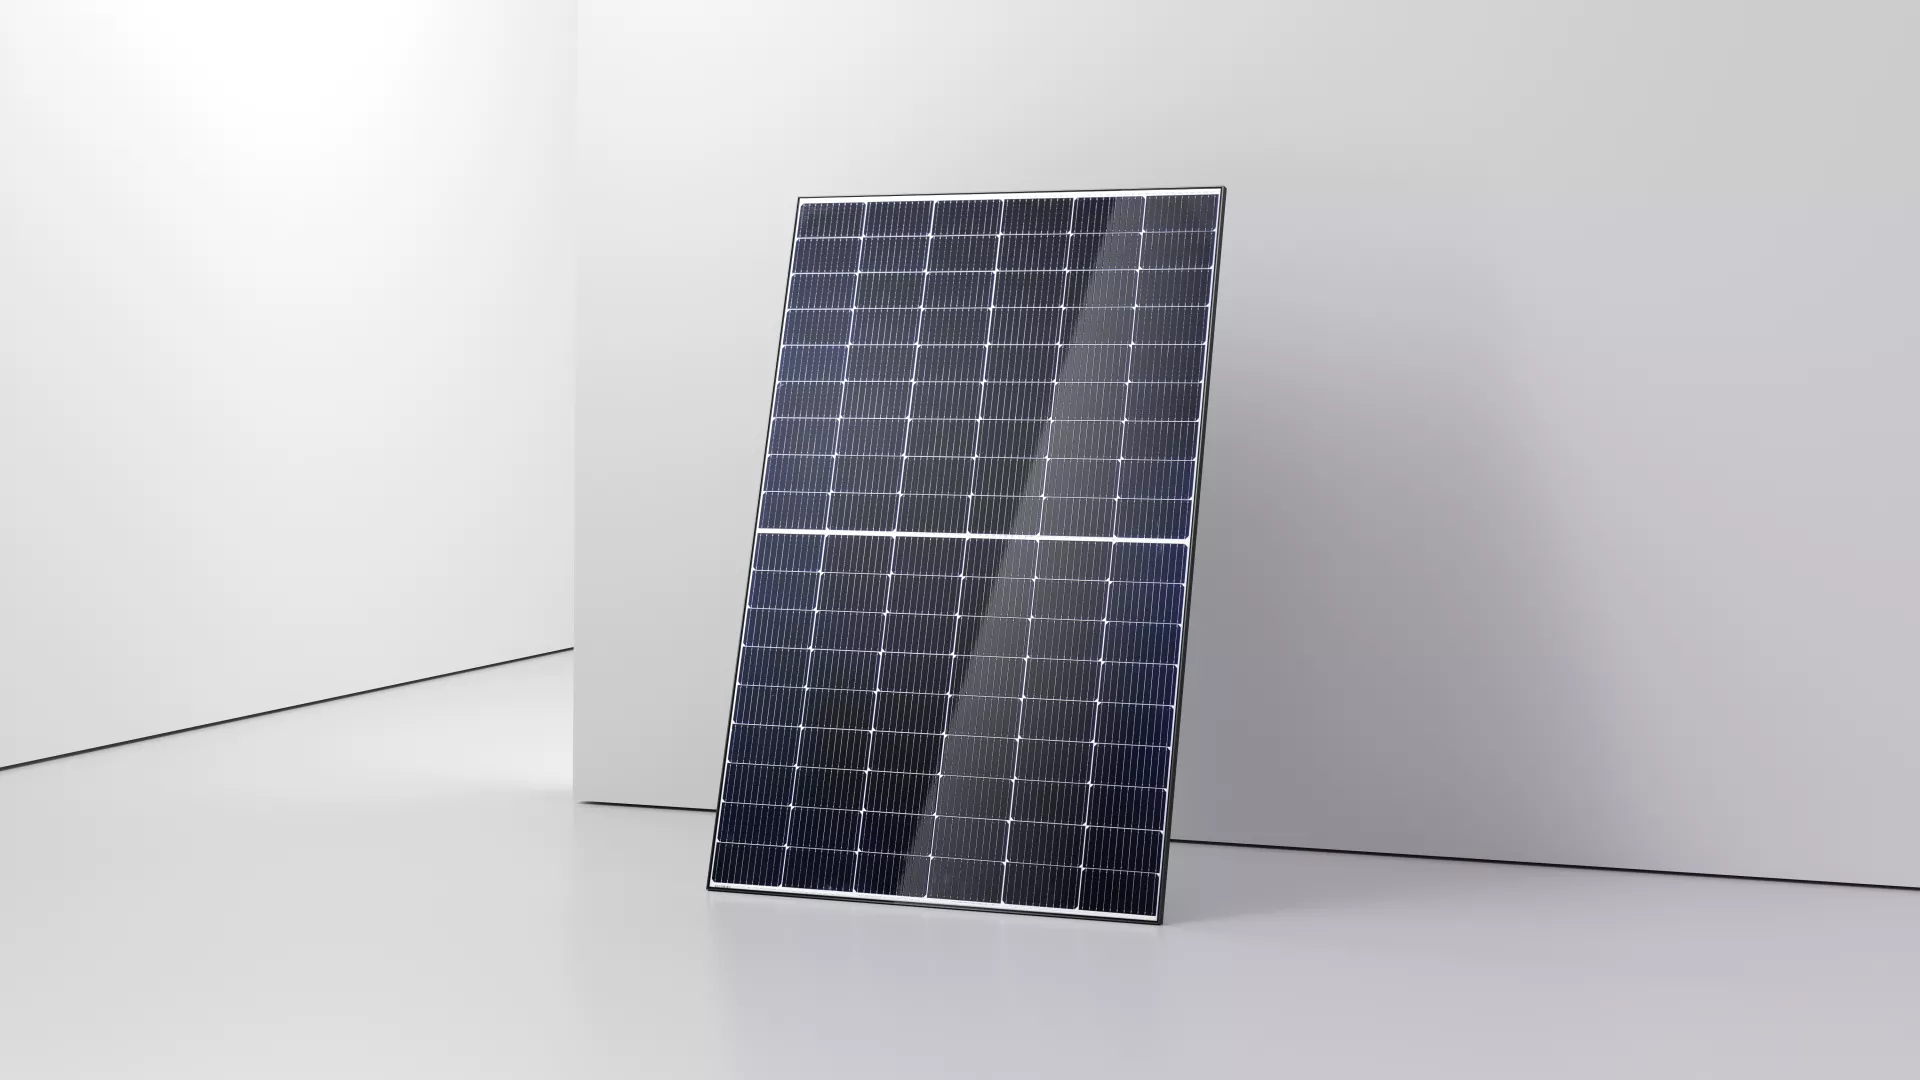 SENEC.Solar solar panel 405 W upright